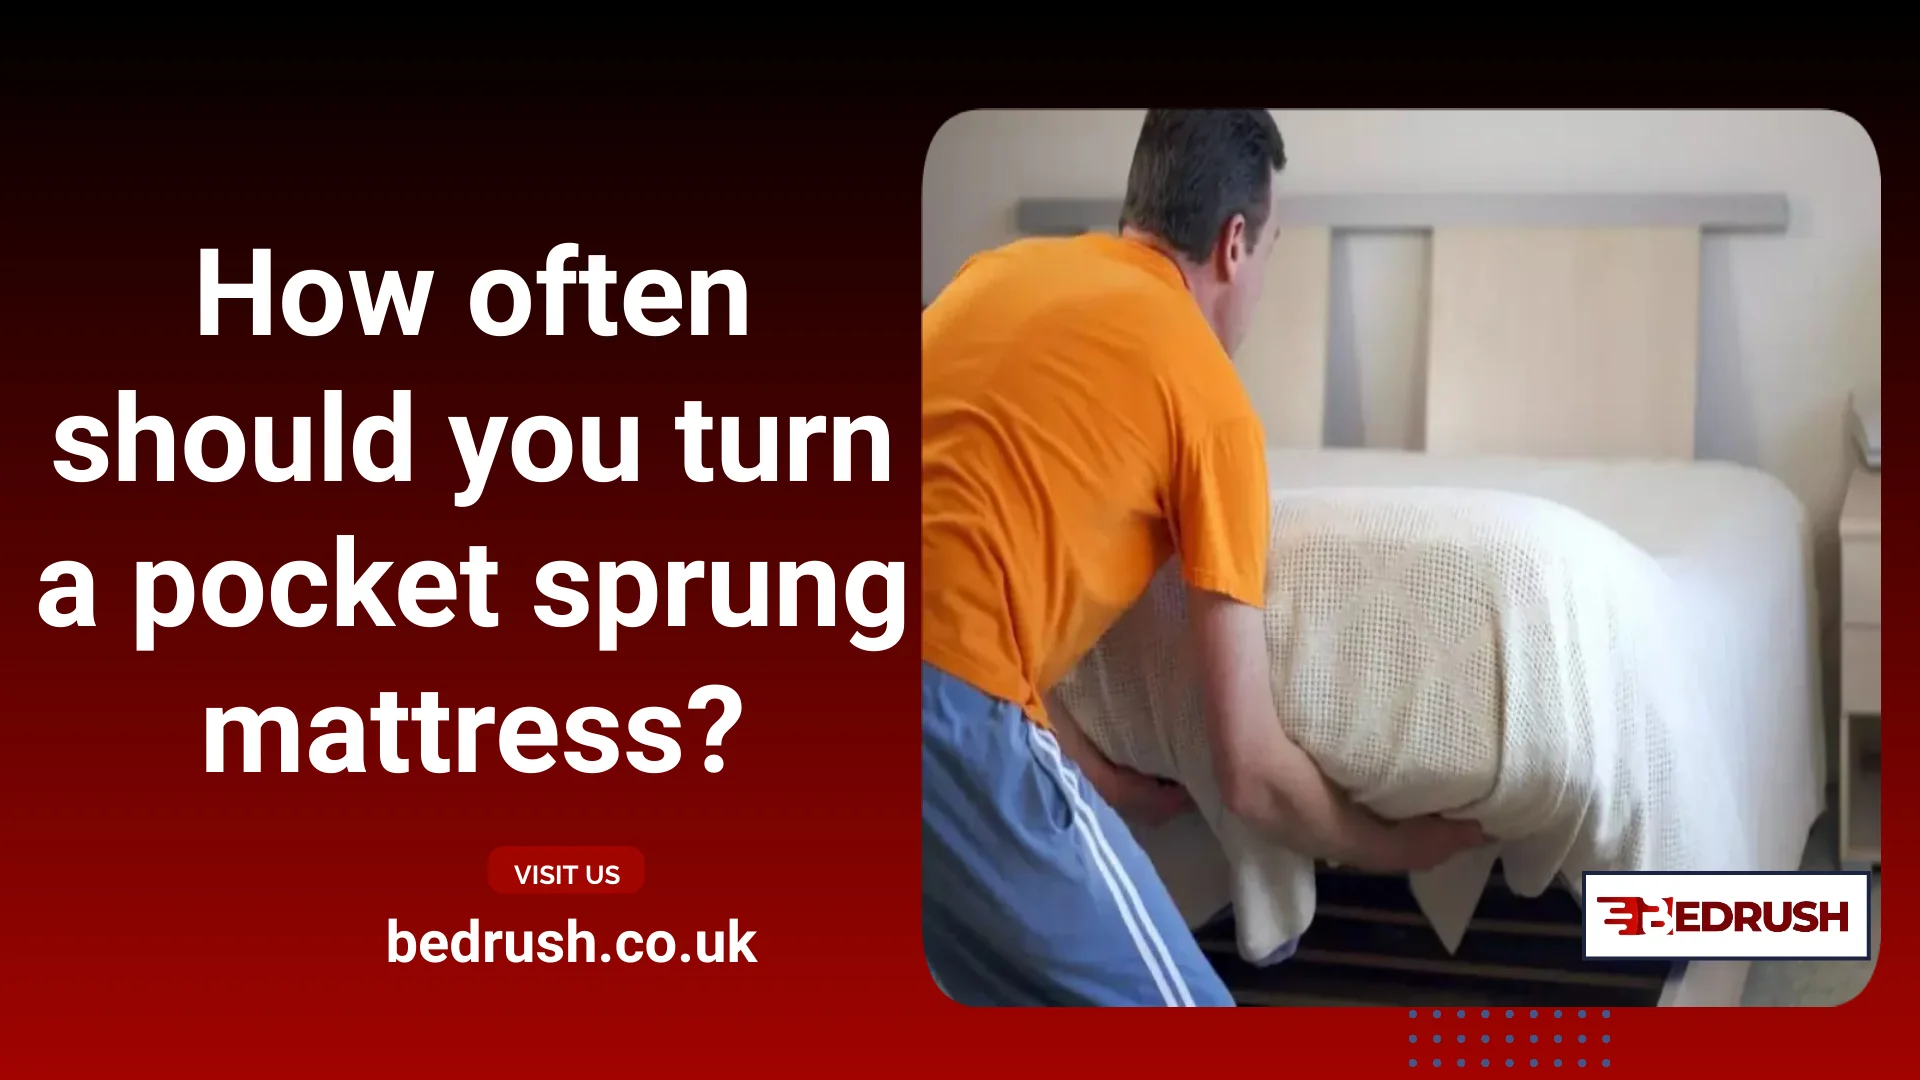 How often should you turn a pocket sprung mattress?